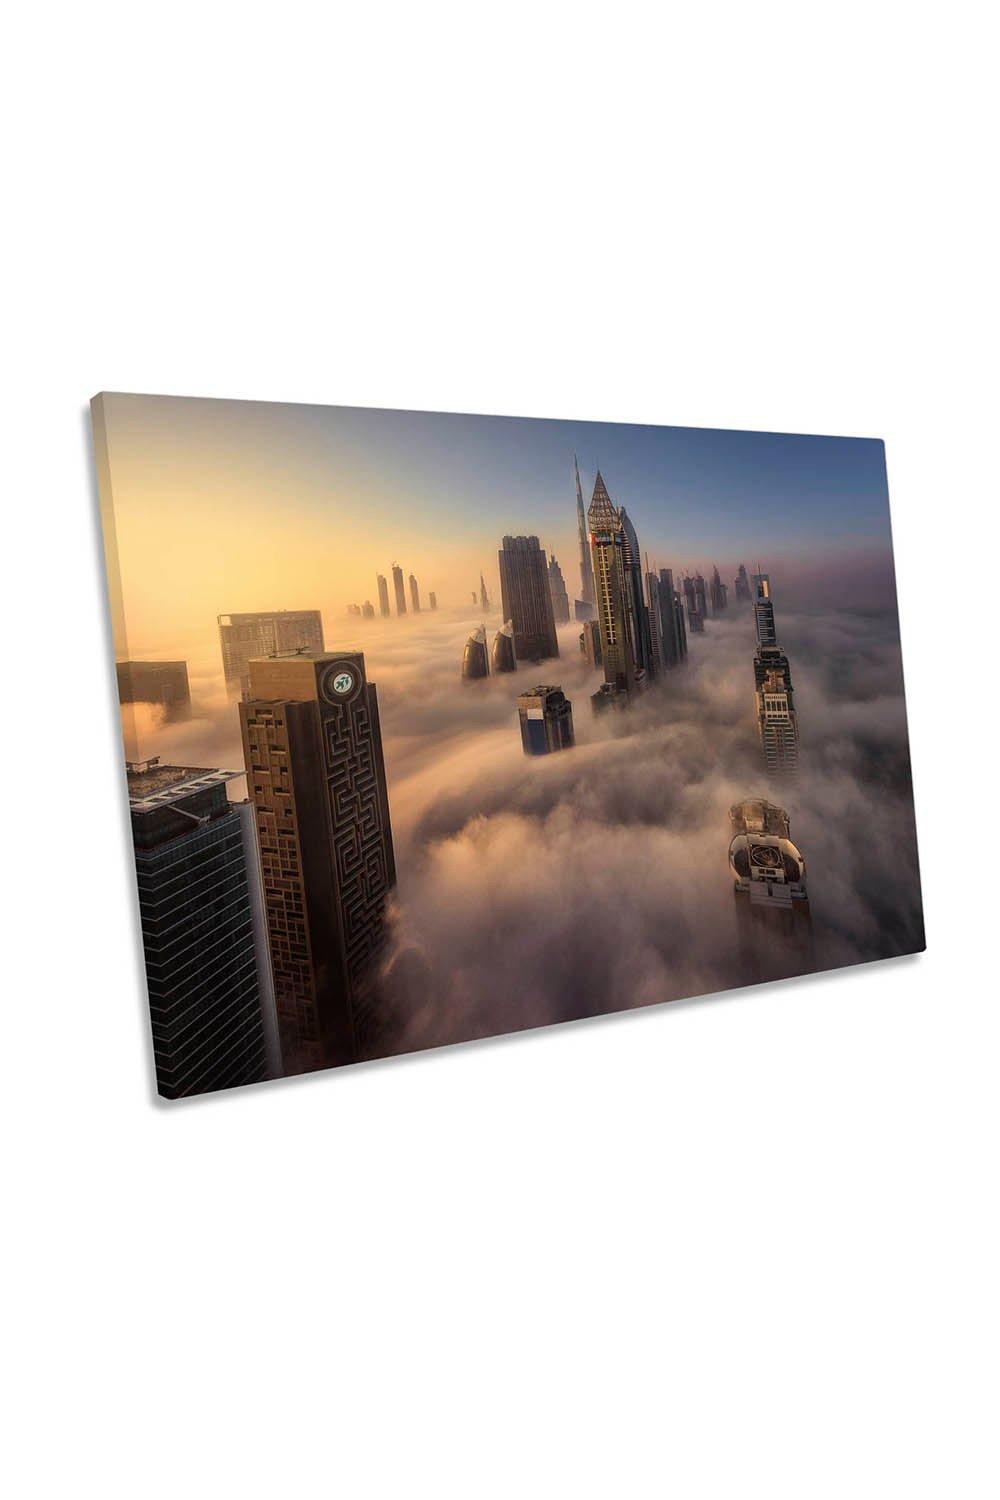 Cloudy Dubai City Skyline Canvas Wall Art Picture Print